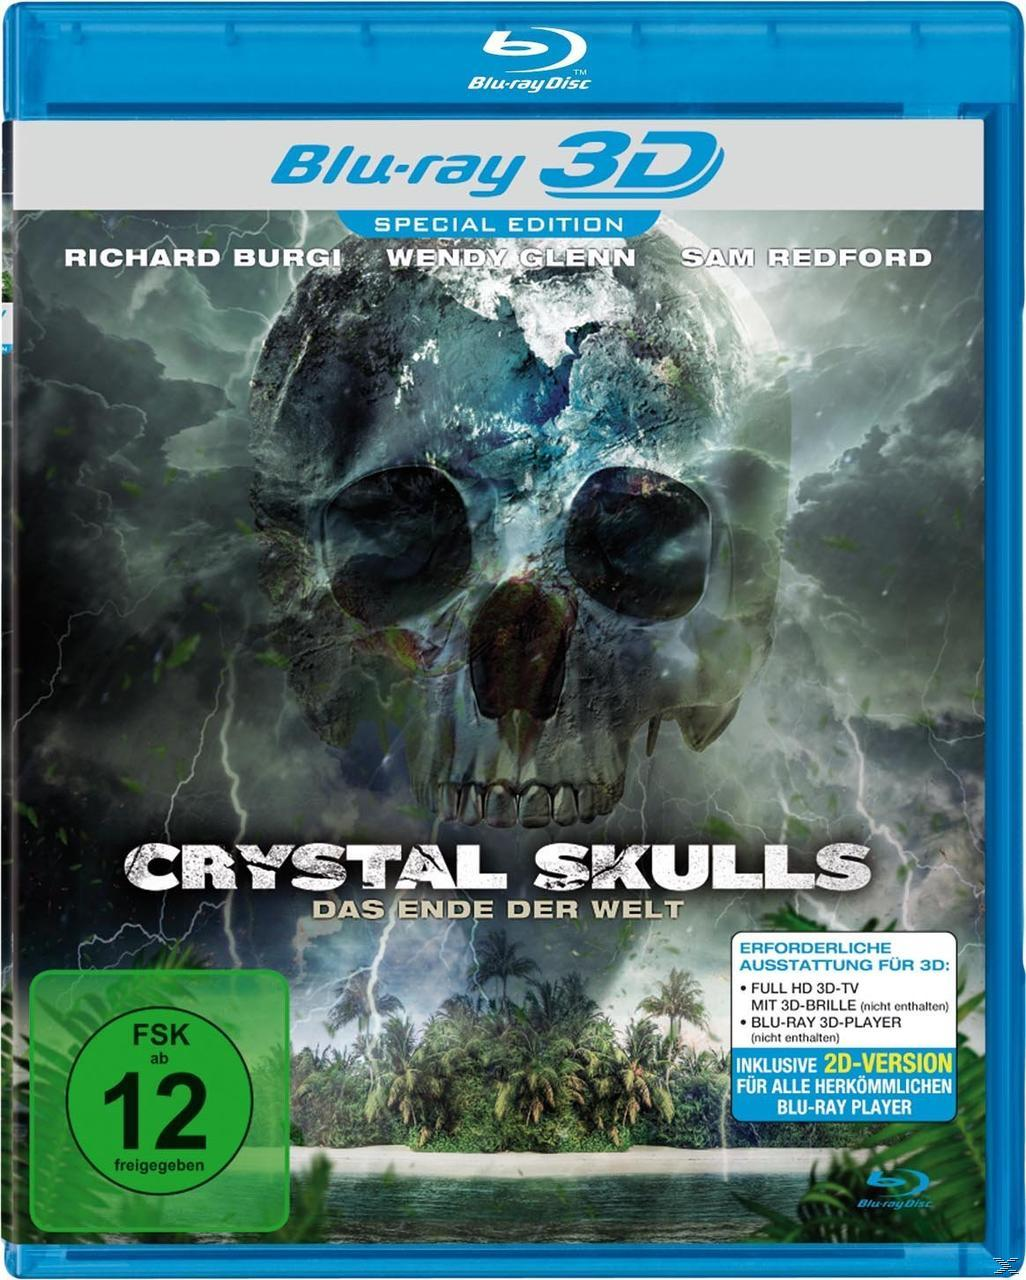 Blu-ray 3D Crystal Skulls